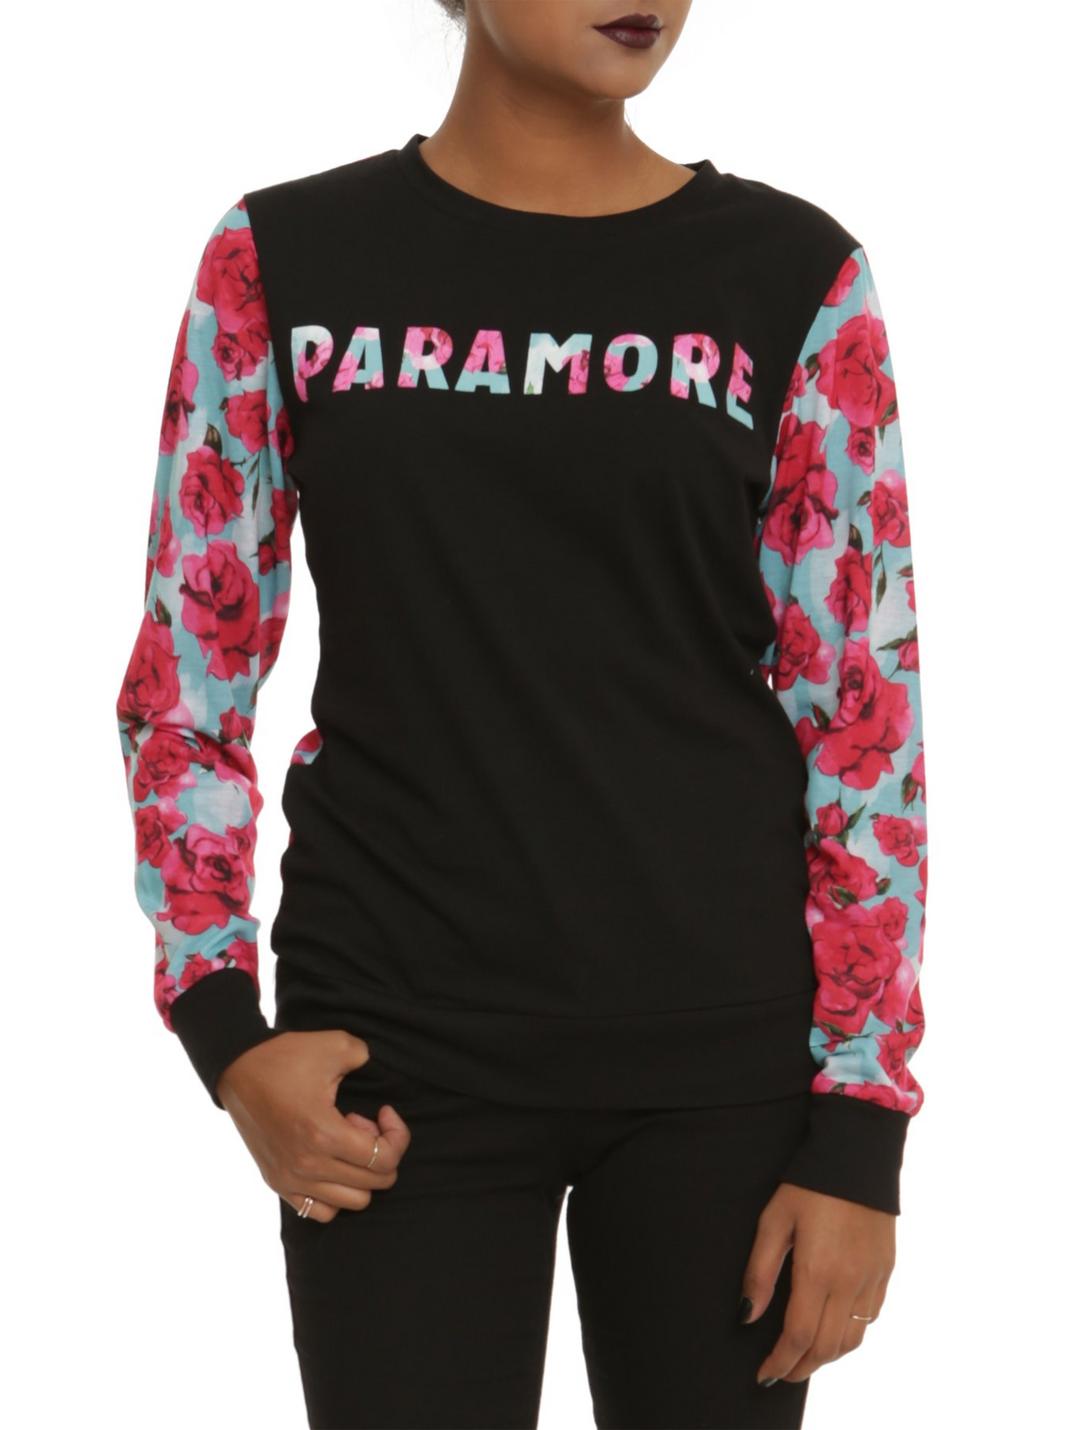 Paramore Floral Girls Pullover Top, BLACK, hi-res